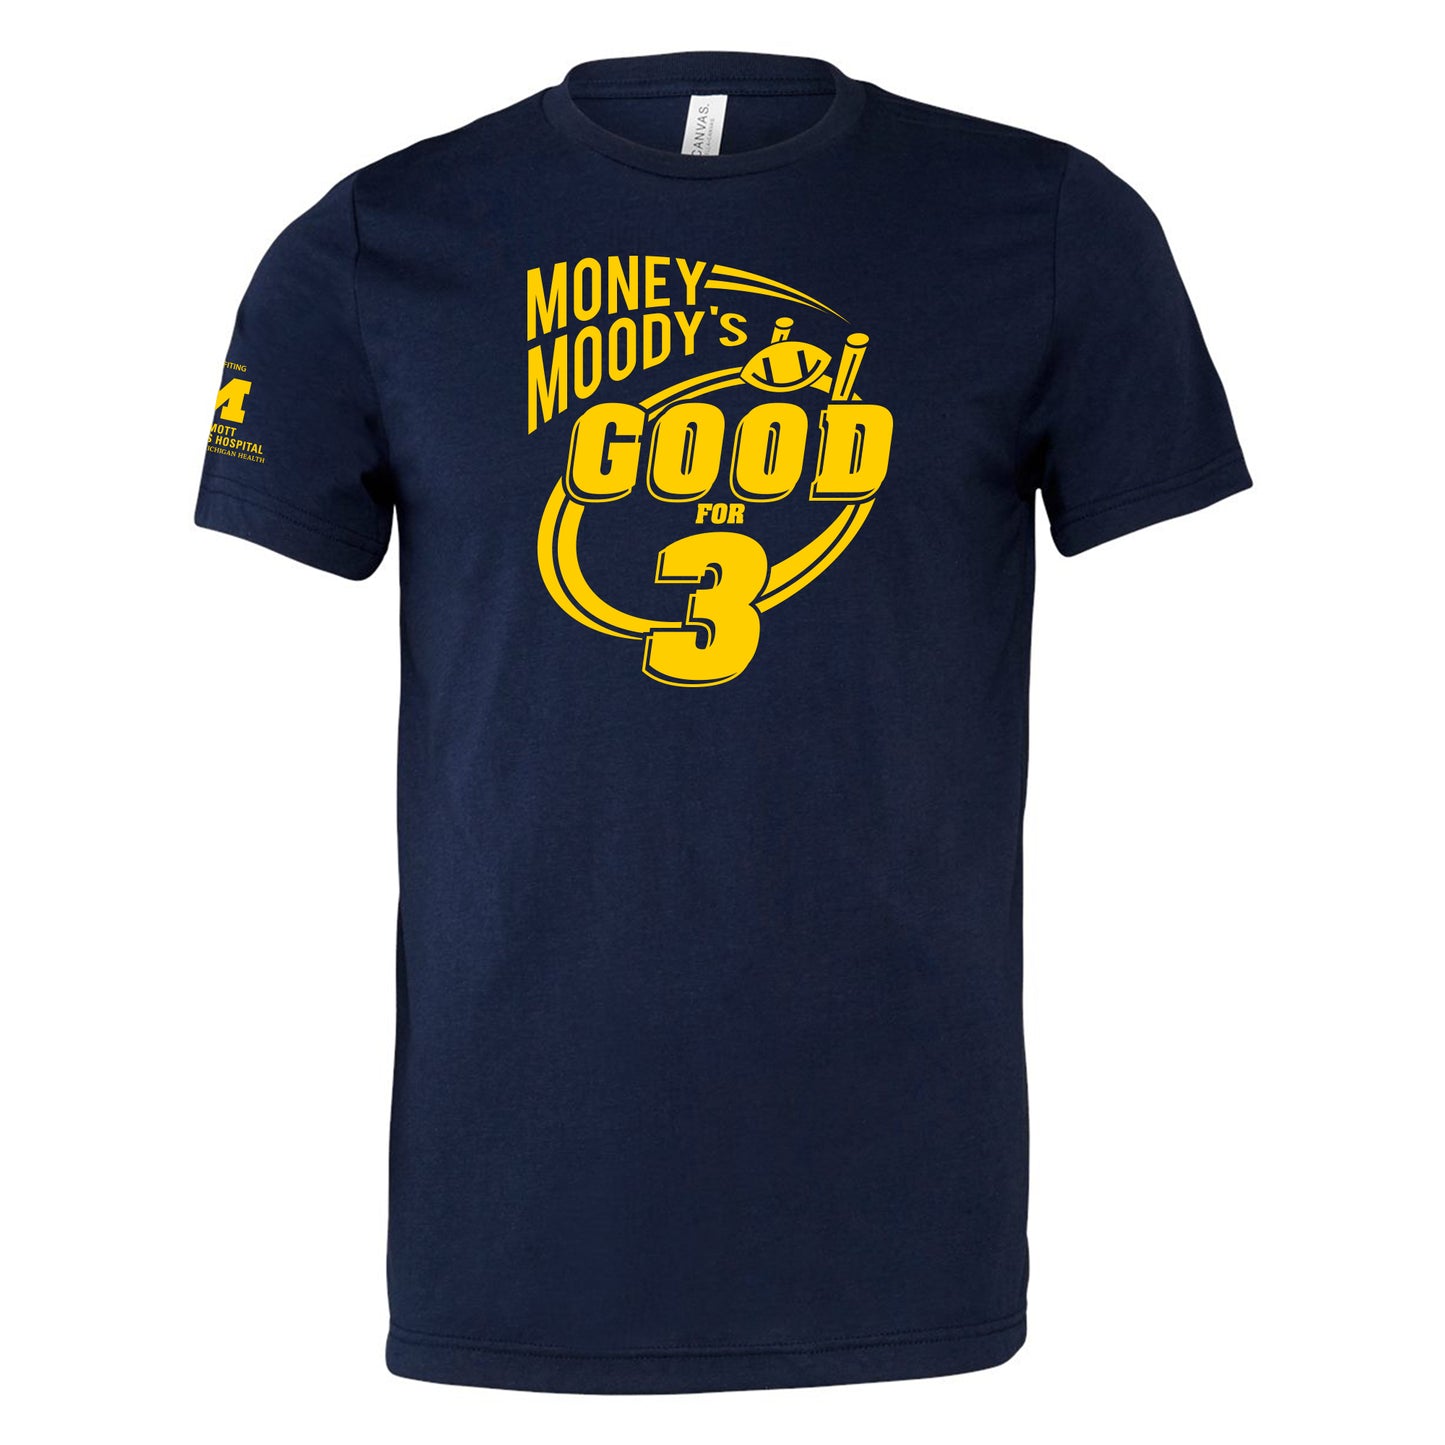 Good For 3 T-Shirt - Navy